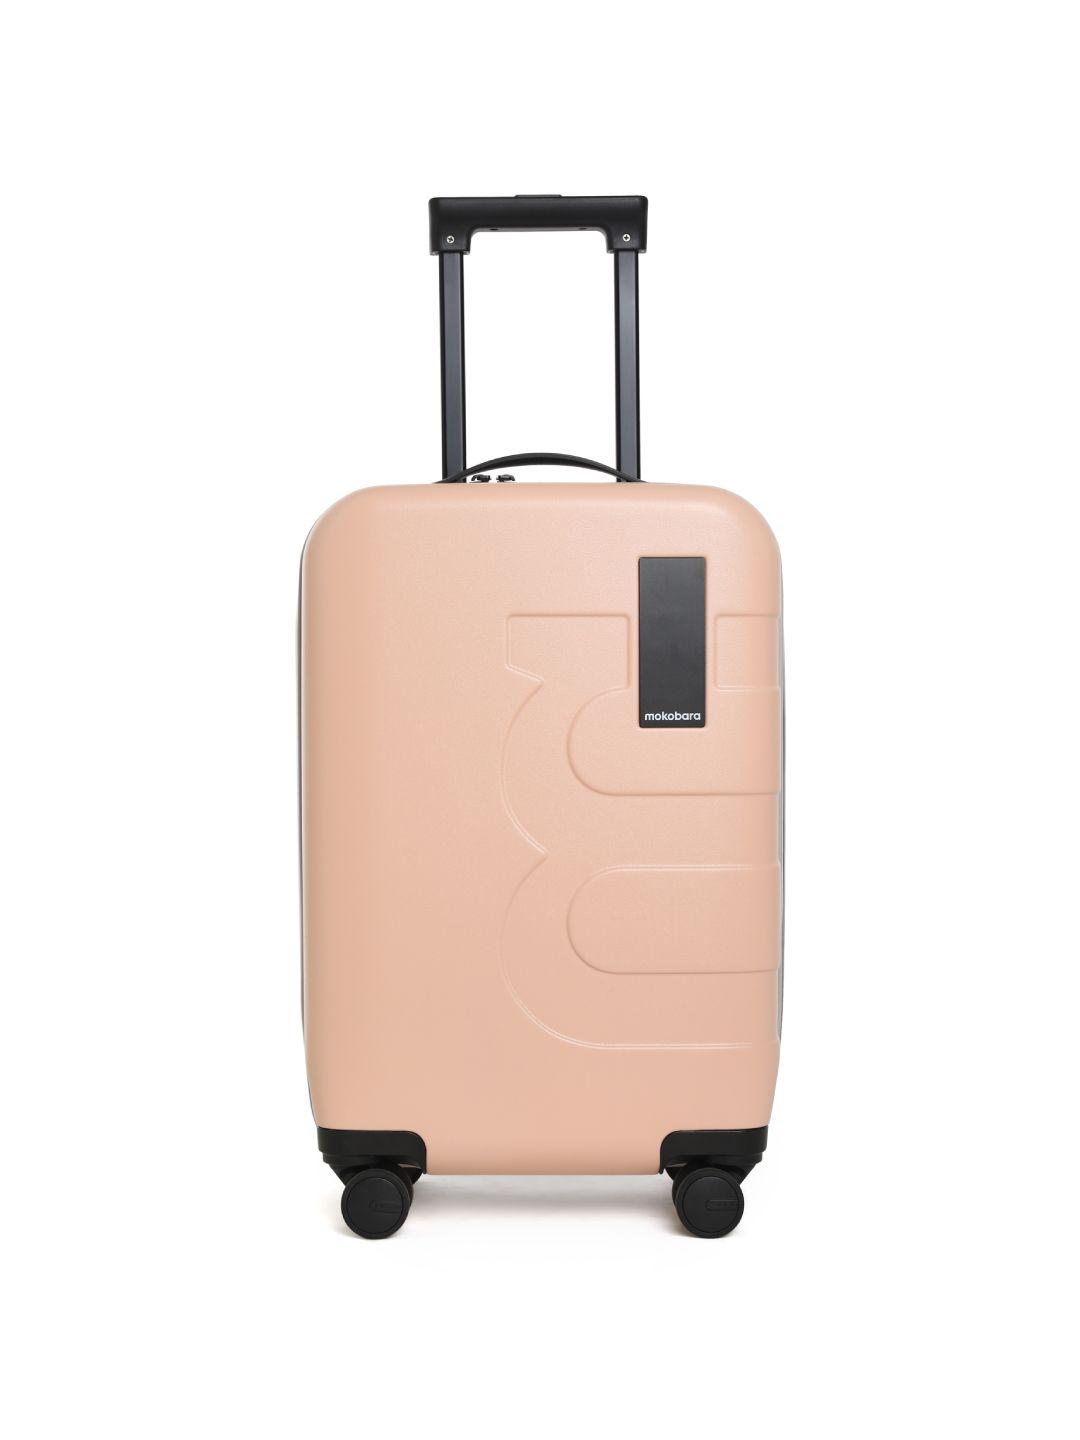 mokobara hard-sided medium trolley suitcase